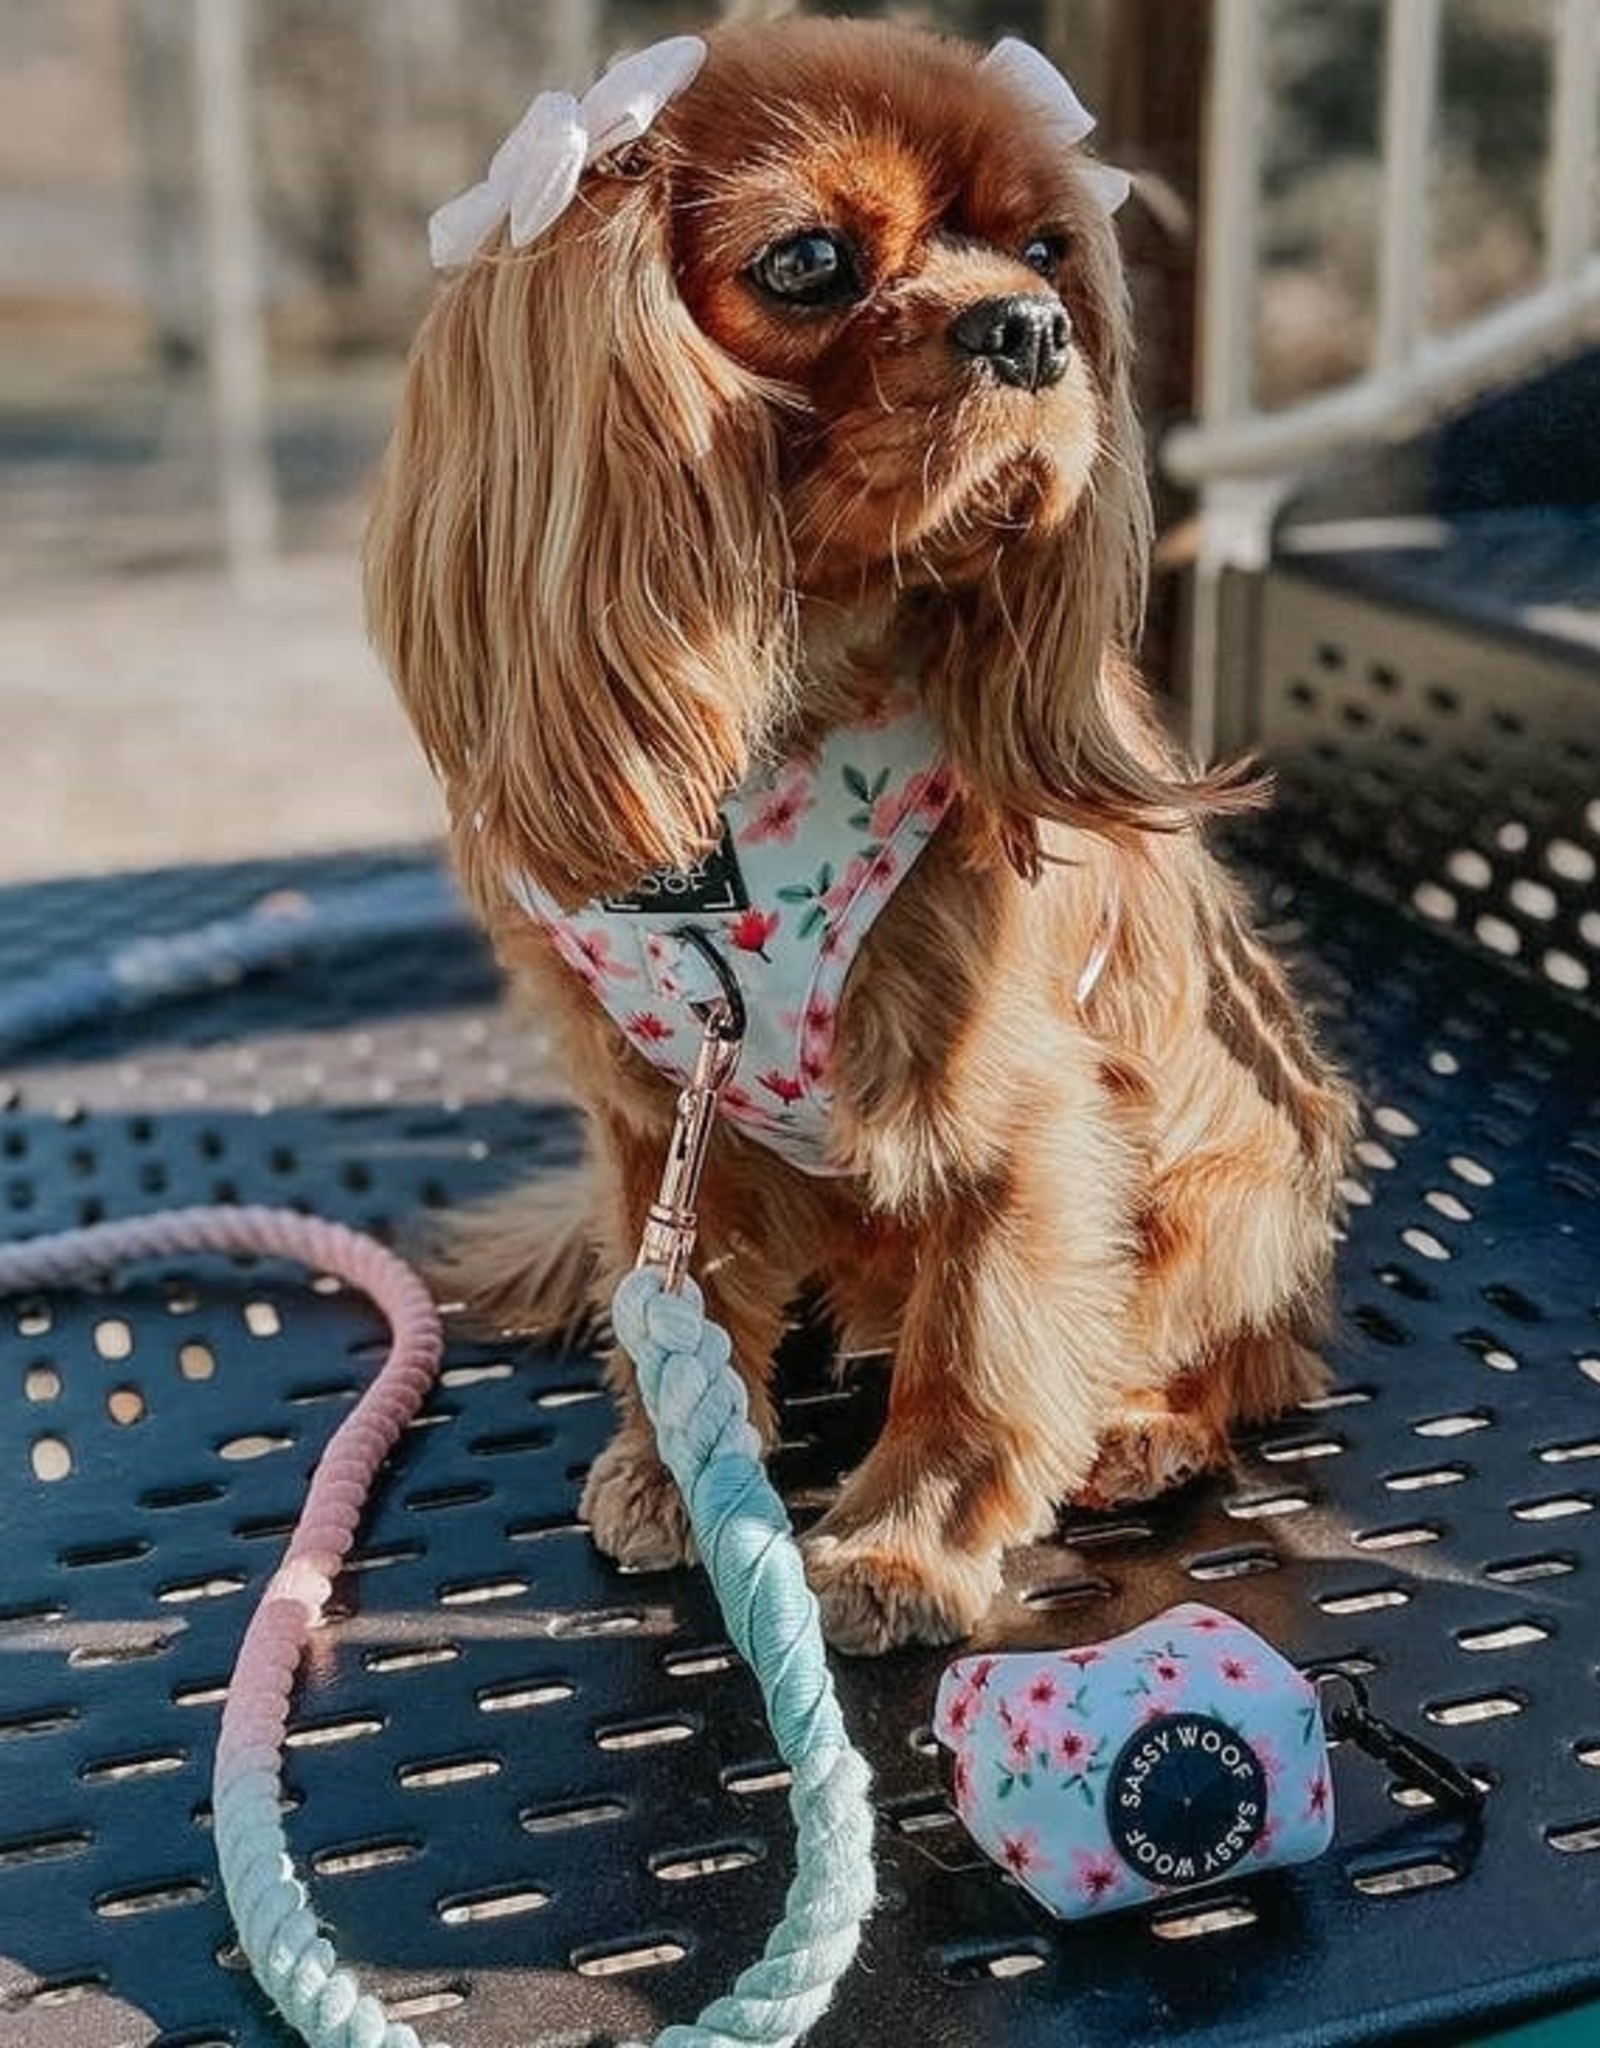 Sassy Woof Sakura Adjustable Dog Harness